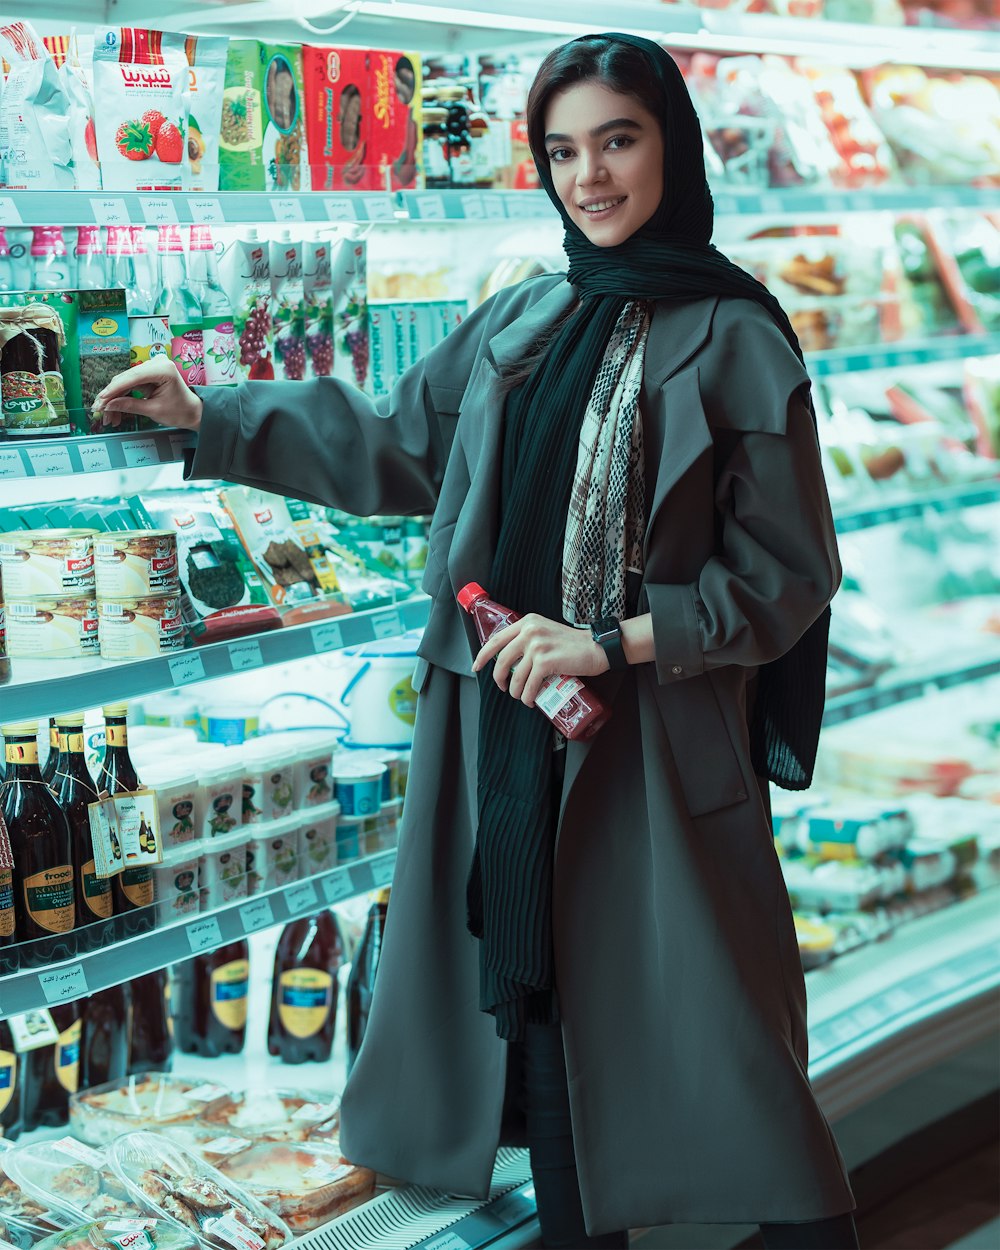 woman wearing black scarf near the refrigerator